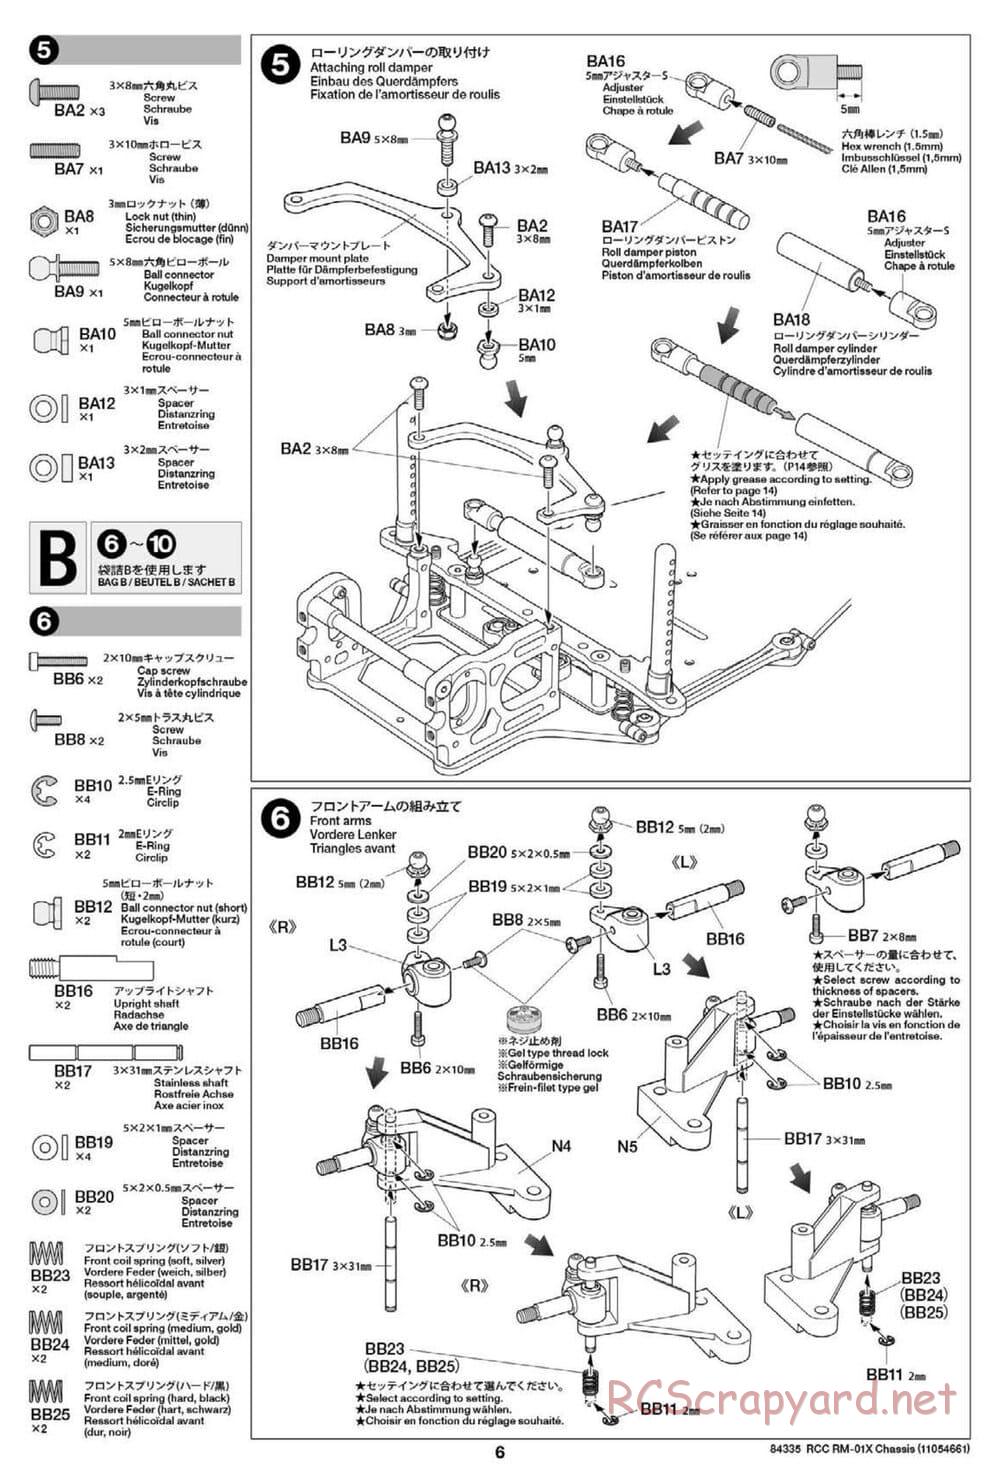 Tamiya - RM-01X Chassis - Manual - Page 6